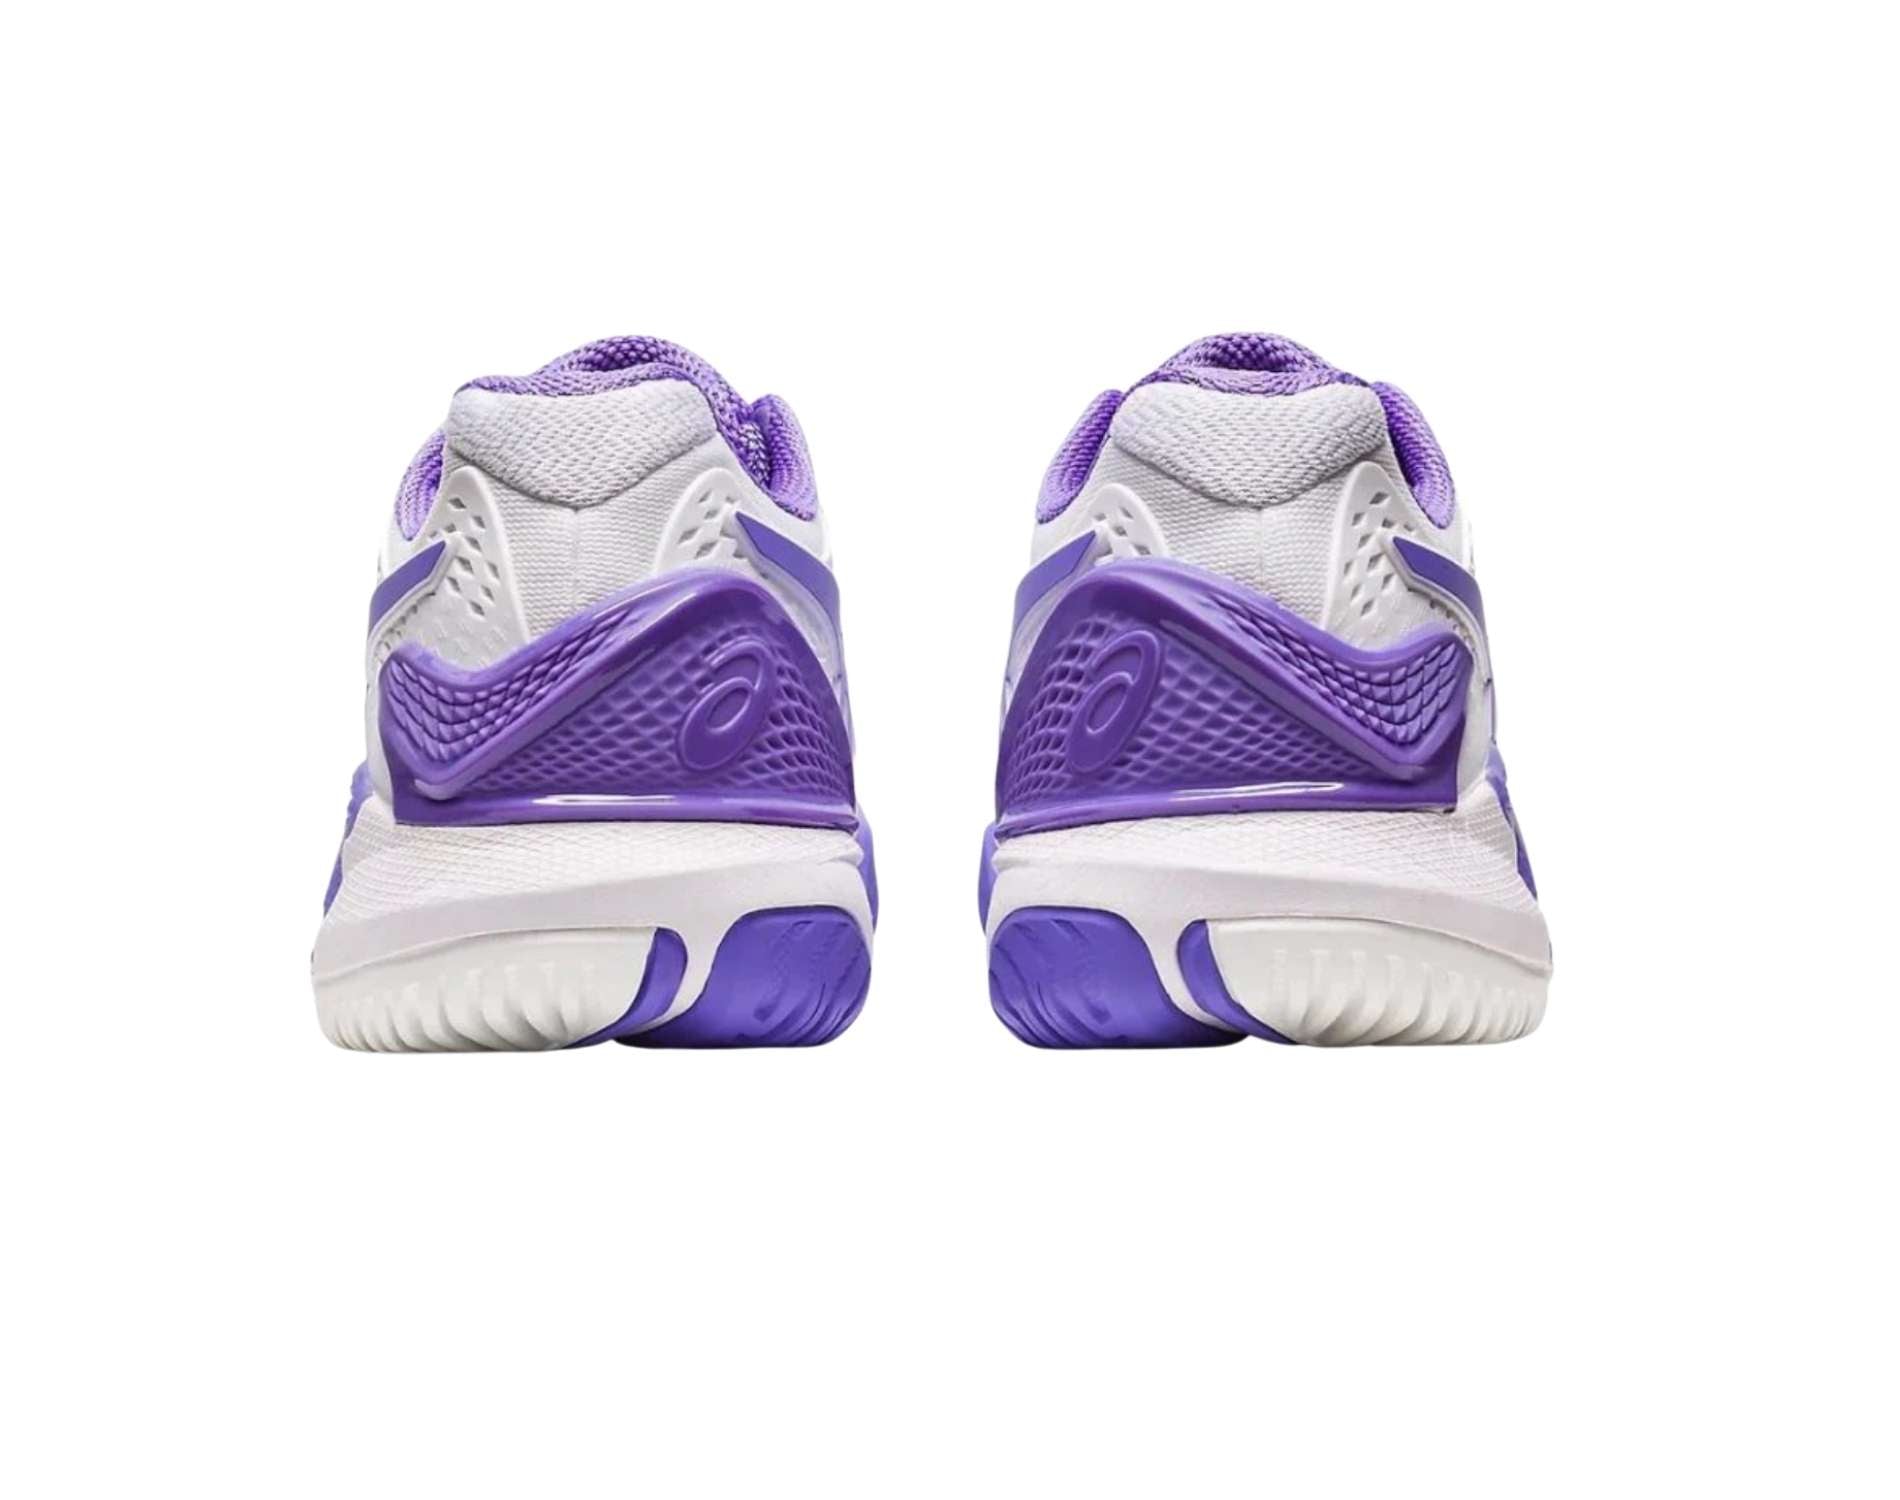 Asics Gel Resolution 9 womens tennis shoe in b standard width in white amethyst colour